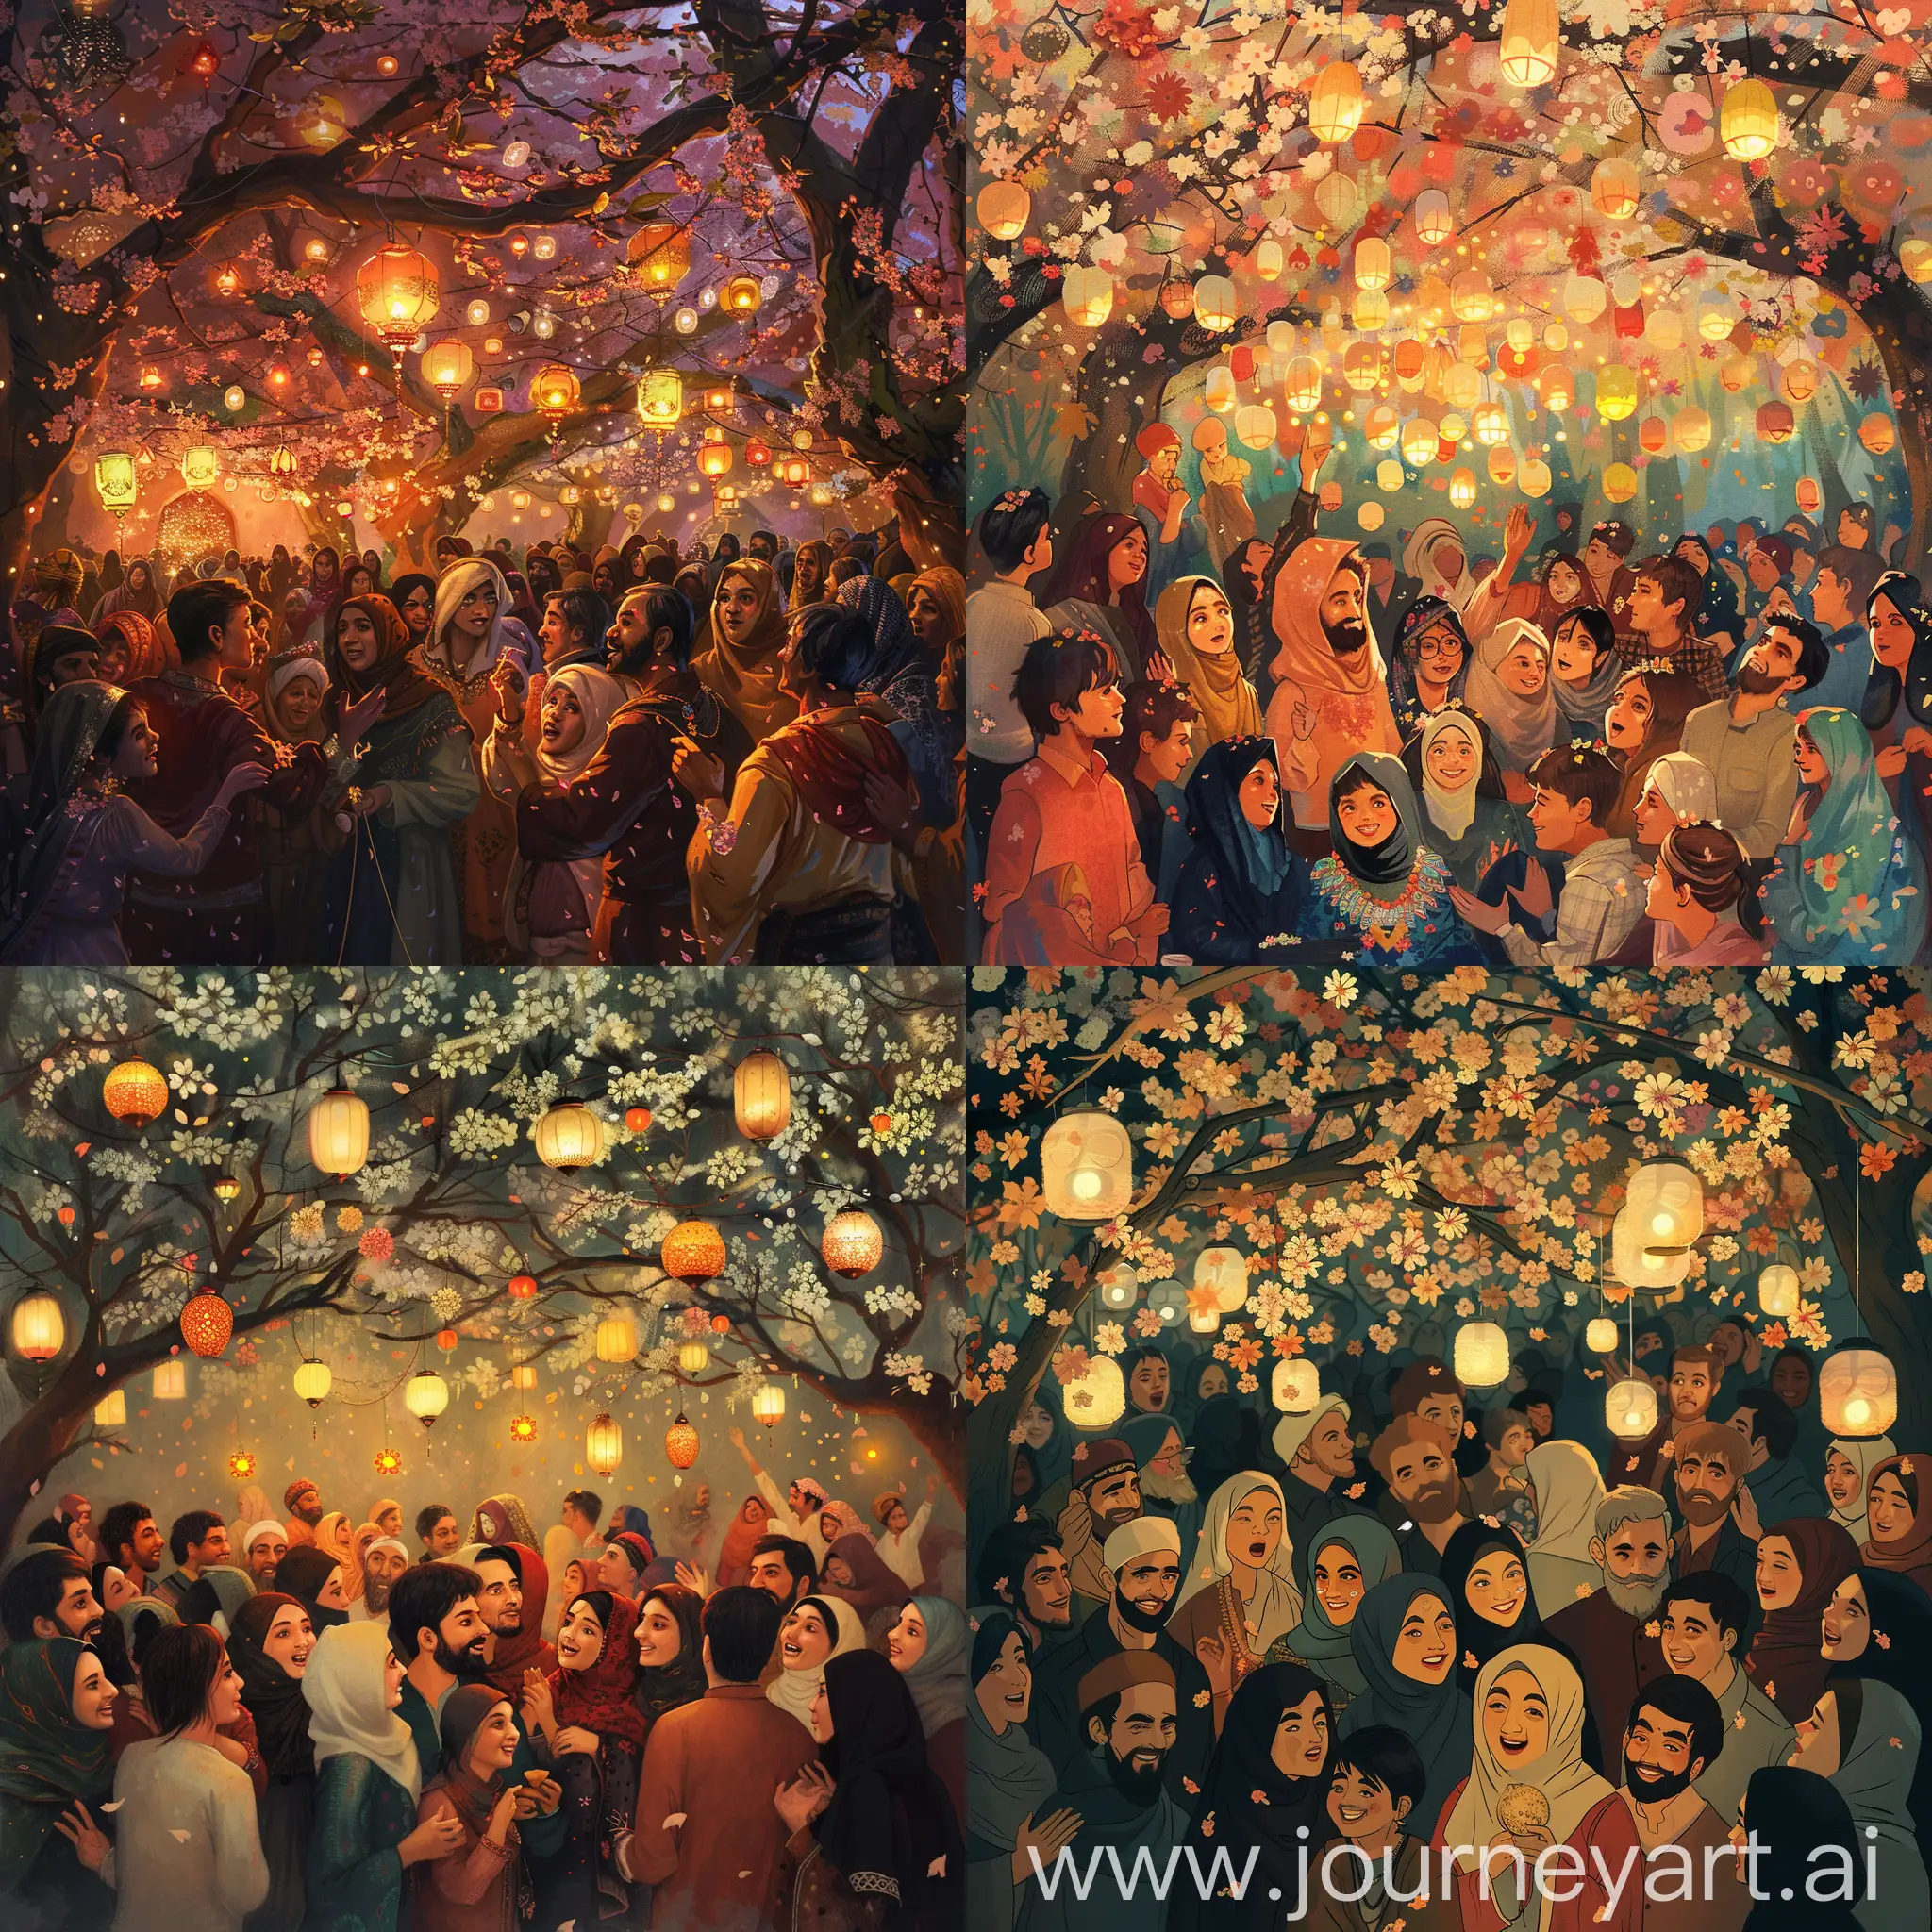 Global-Nowruz-and-Eid-Celebration-under-Blossom-Canopy-with-Lanterns